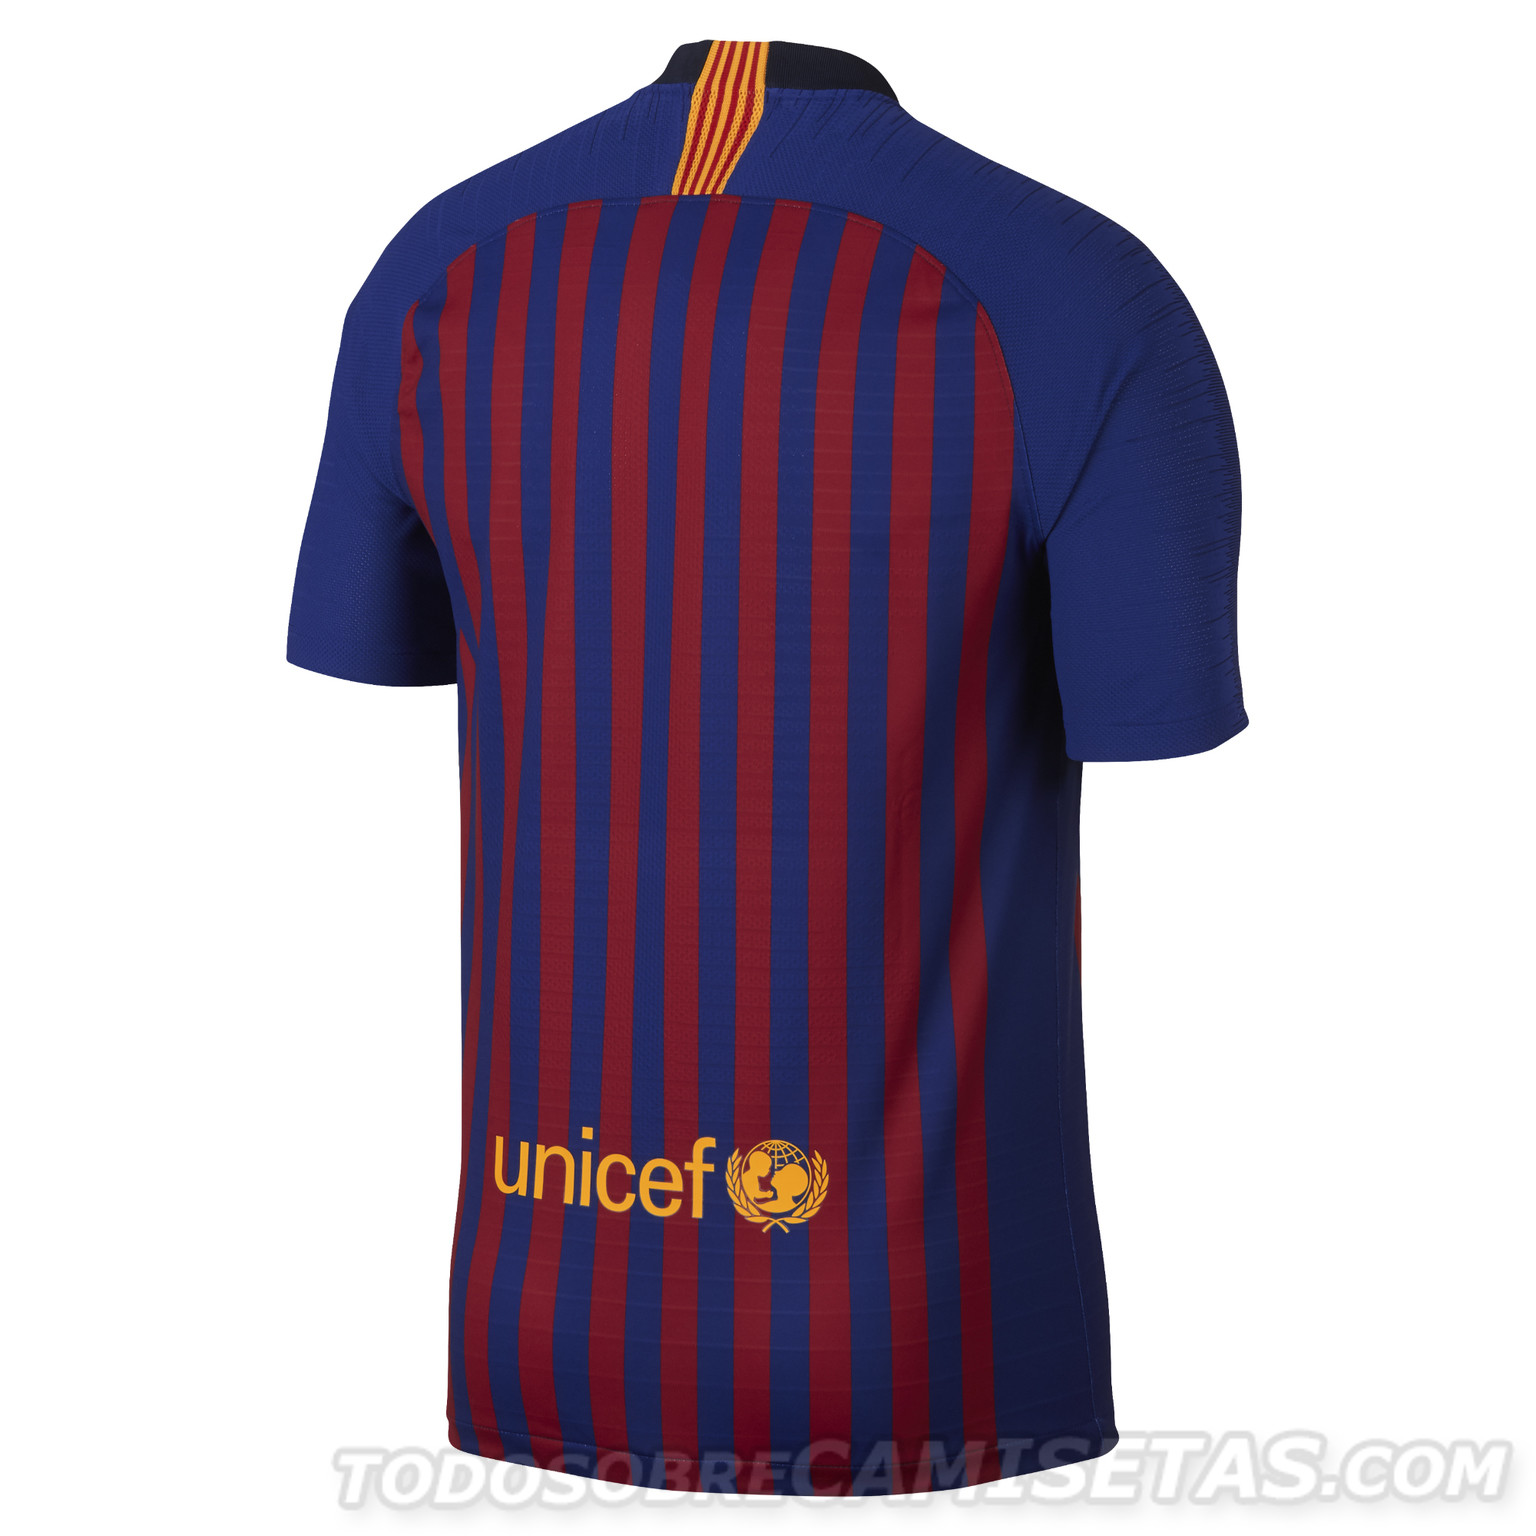 Camiseta Nike de FC Barcelona 2018-19